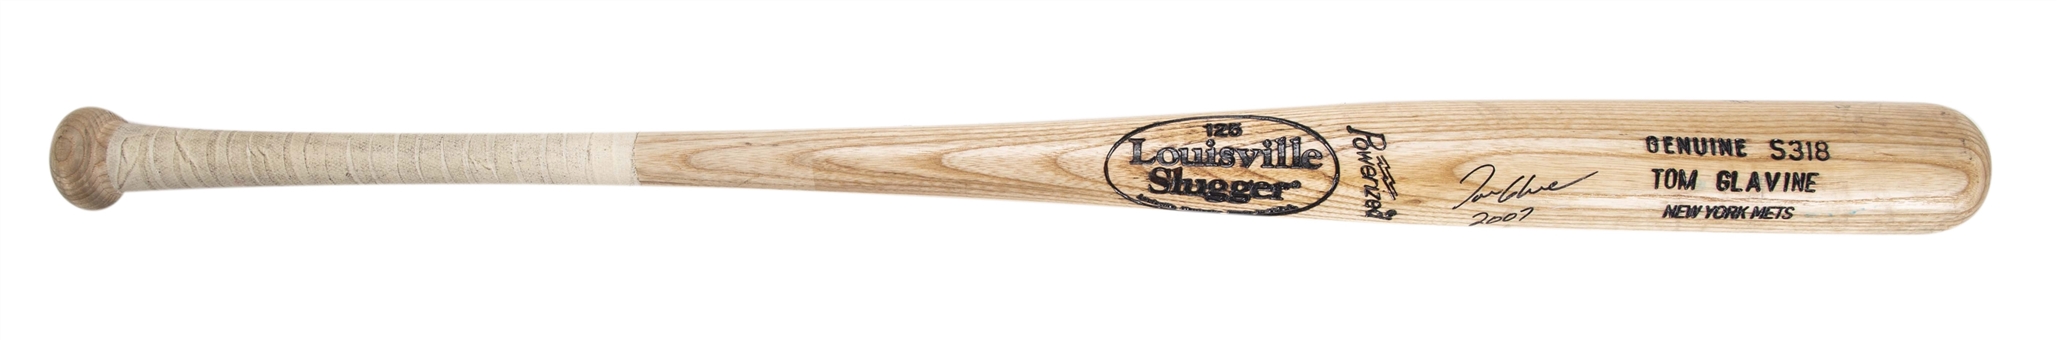 2007 Tom Glavine Game Used & Signed Louisville Slugger S318 Model Bat (PSA/DNA GU 8.5 & Beckett)